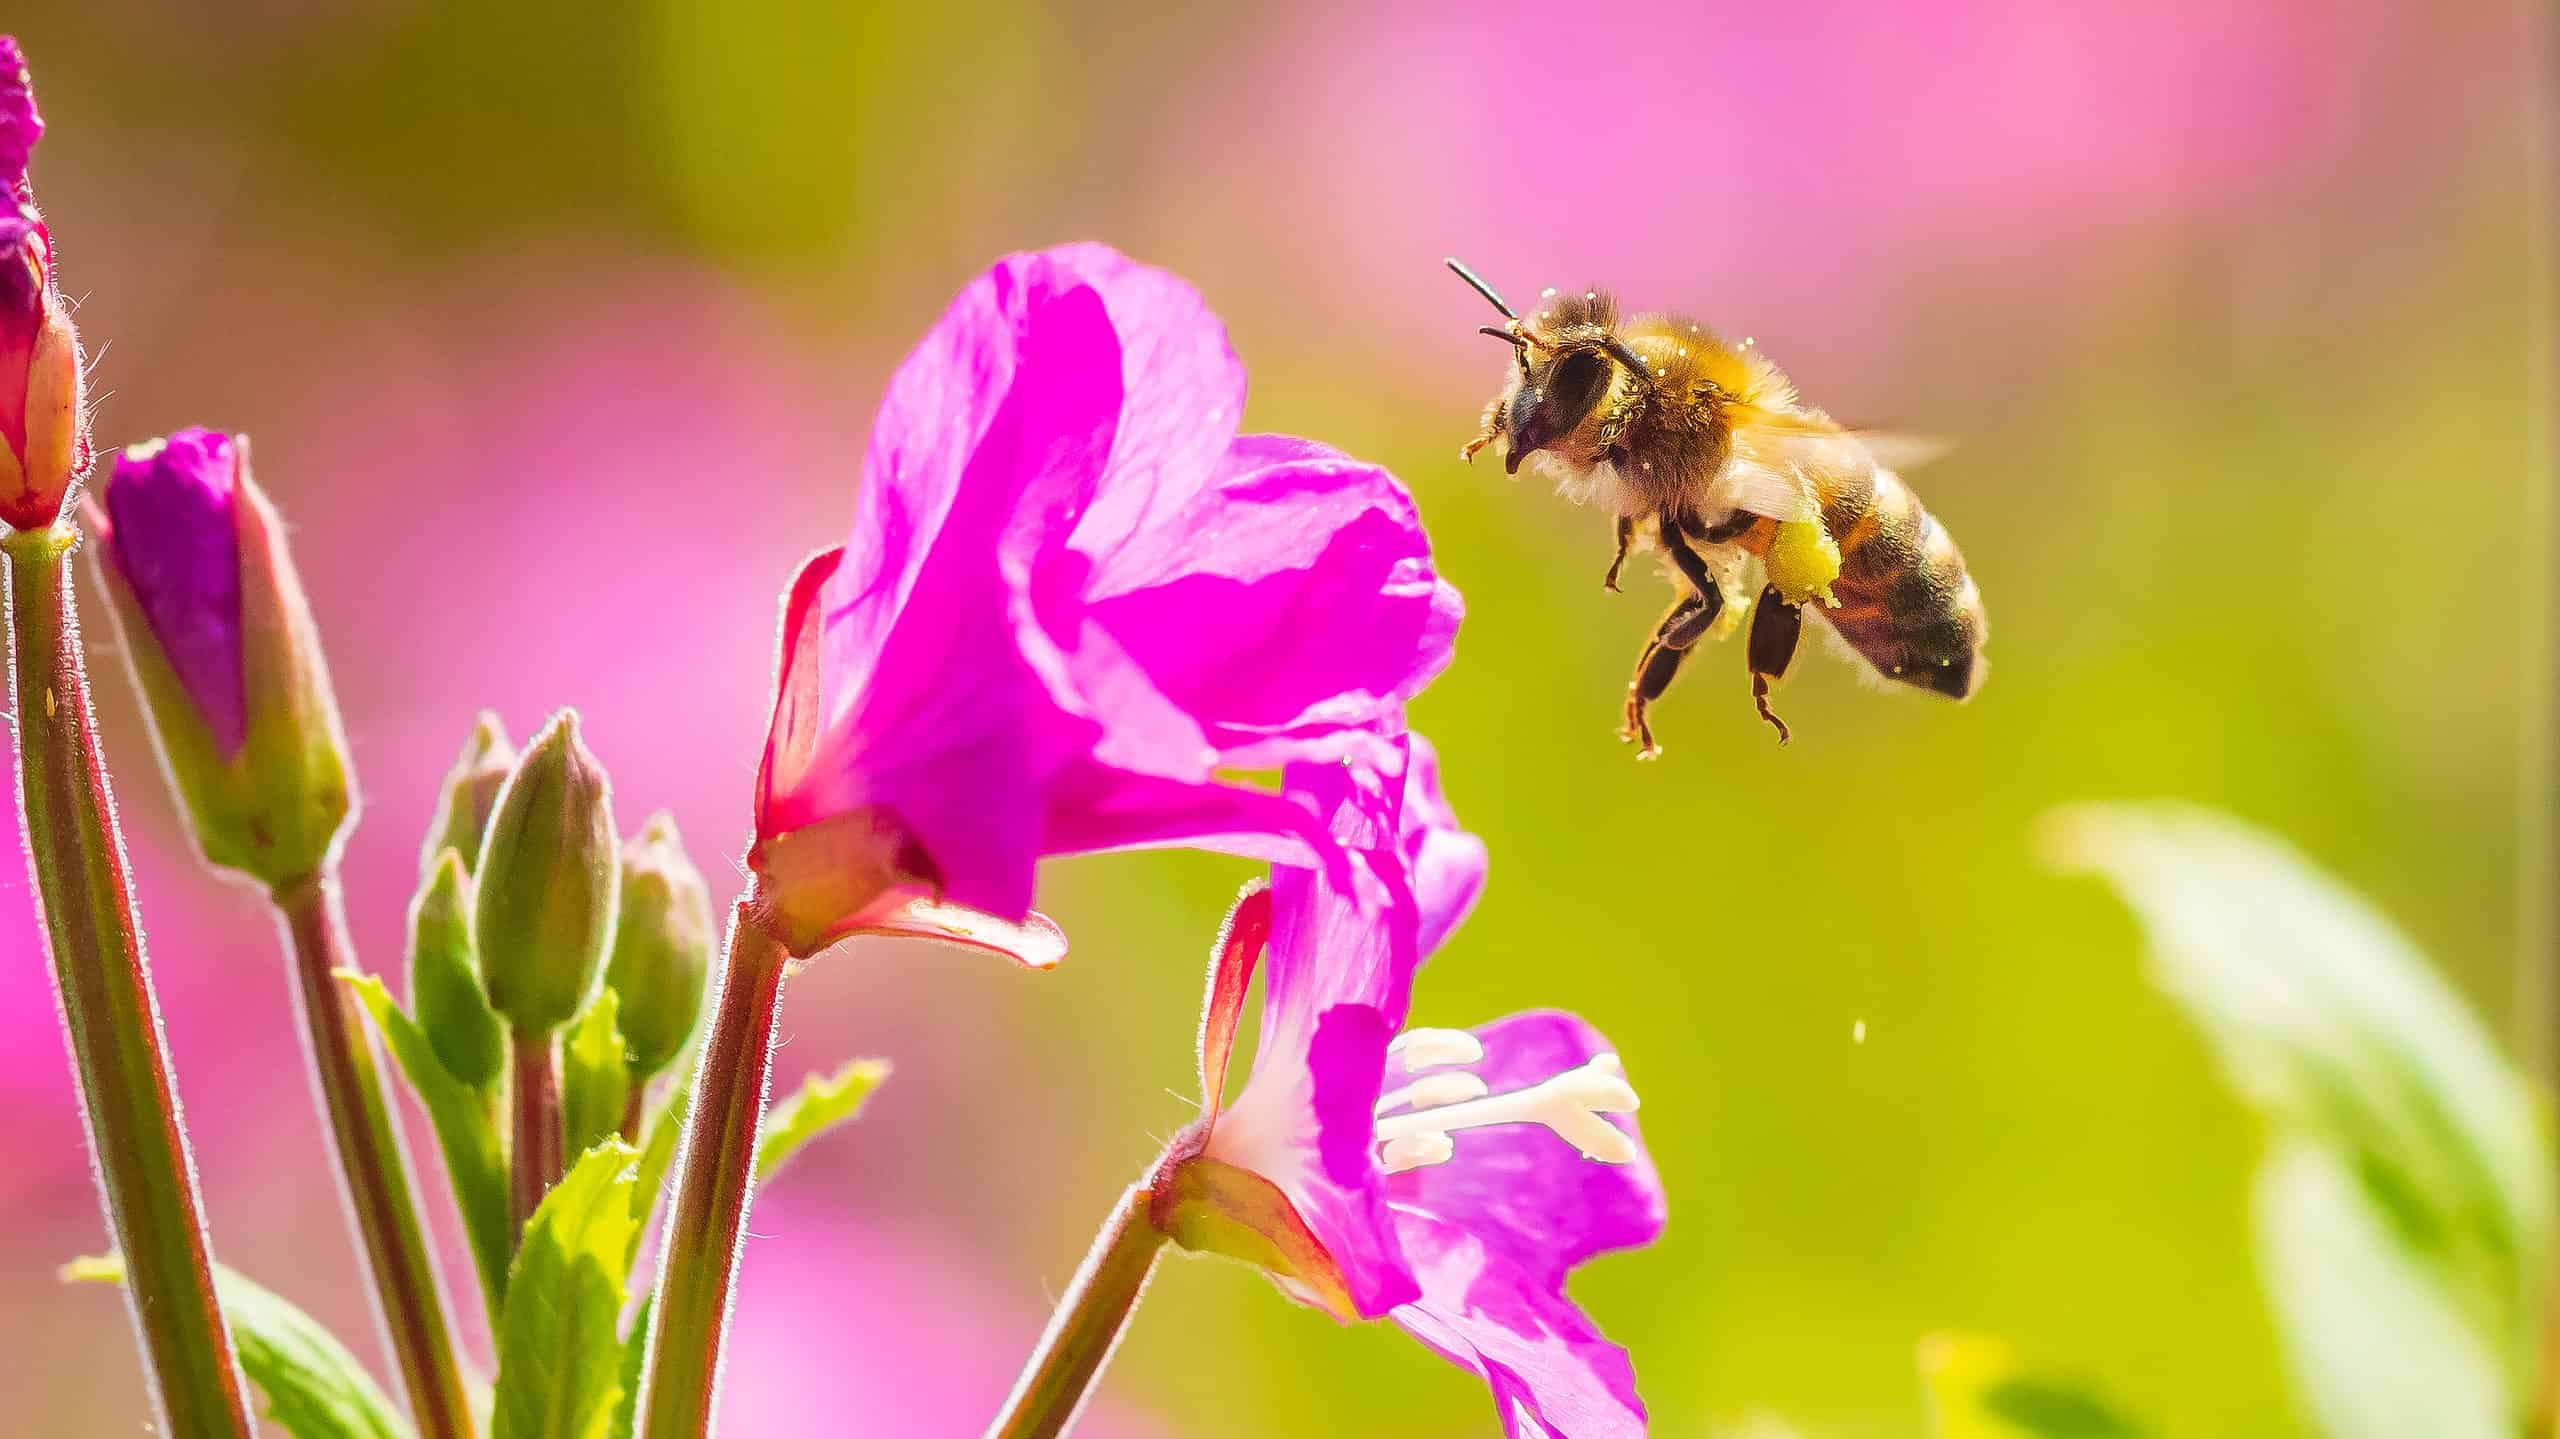 Closeup of a western honey bee or European honey bee (Apis mellifera) feeding nectar of pink great hairy willowherb Epilobium hirsutum flowers